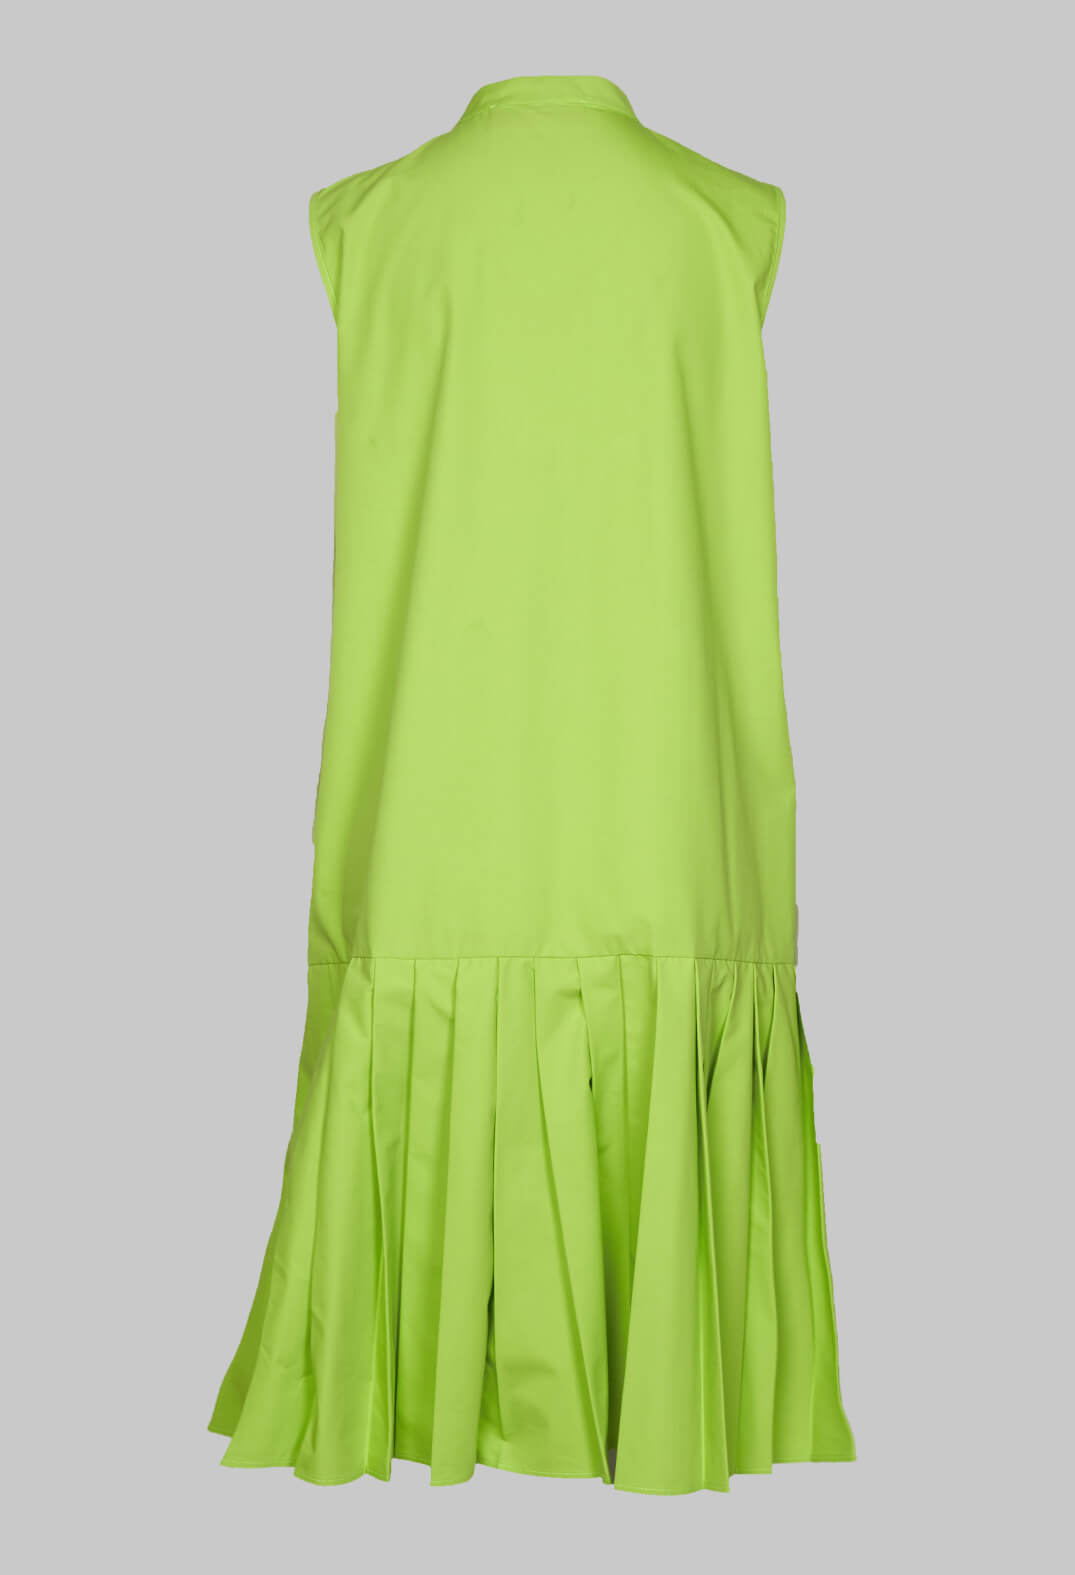 behind shot of long green sleeveless dress with pleated hem